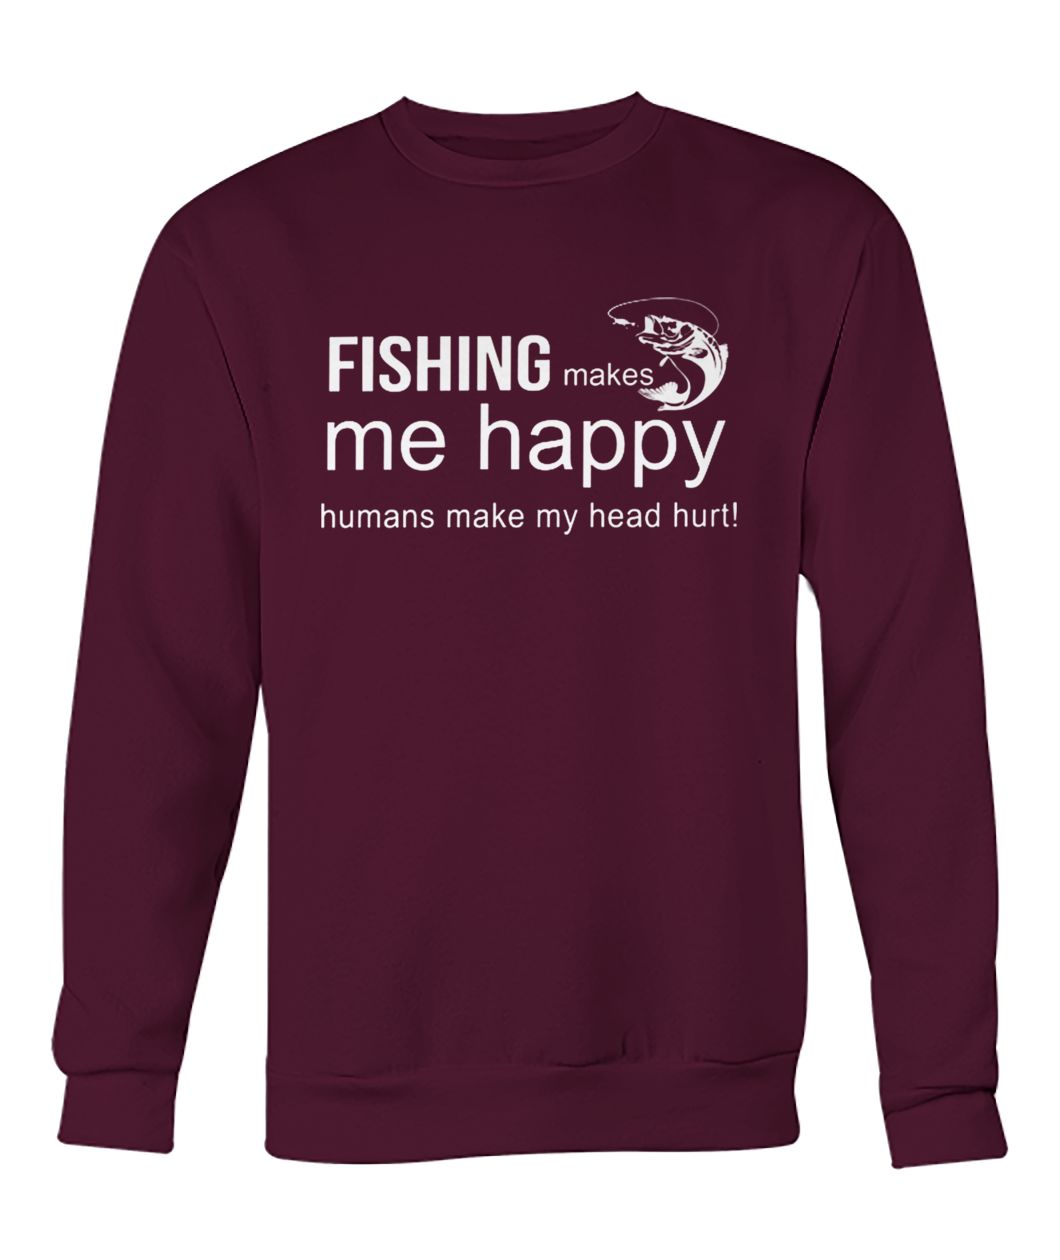 Fishing makes me happy humans make my head hurt crew neck sweatshirt